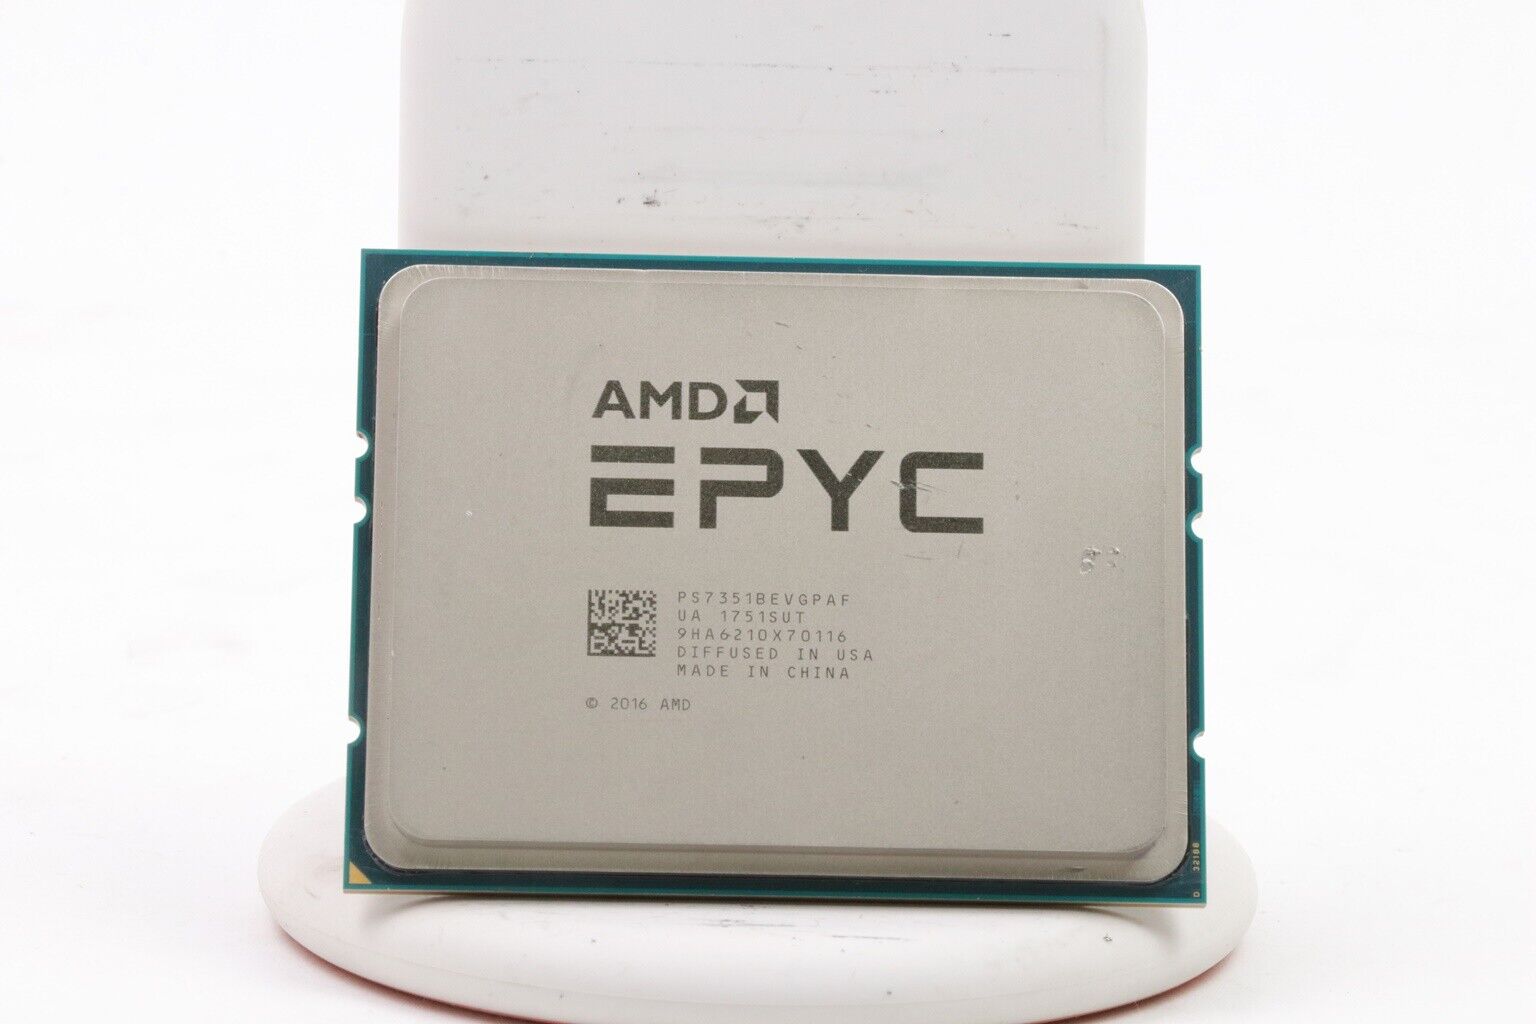 AMD EPYC 7351 16 CORE 2.4GHZ PROCESSOR | PS7351BEVGPAF